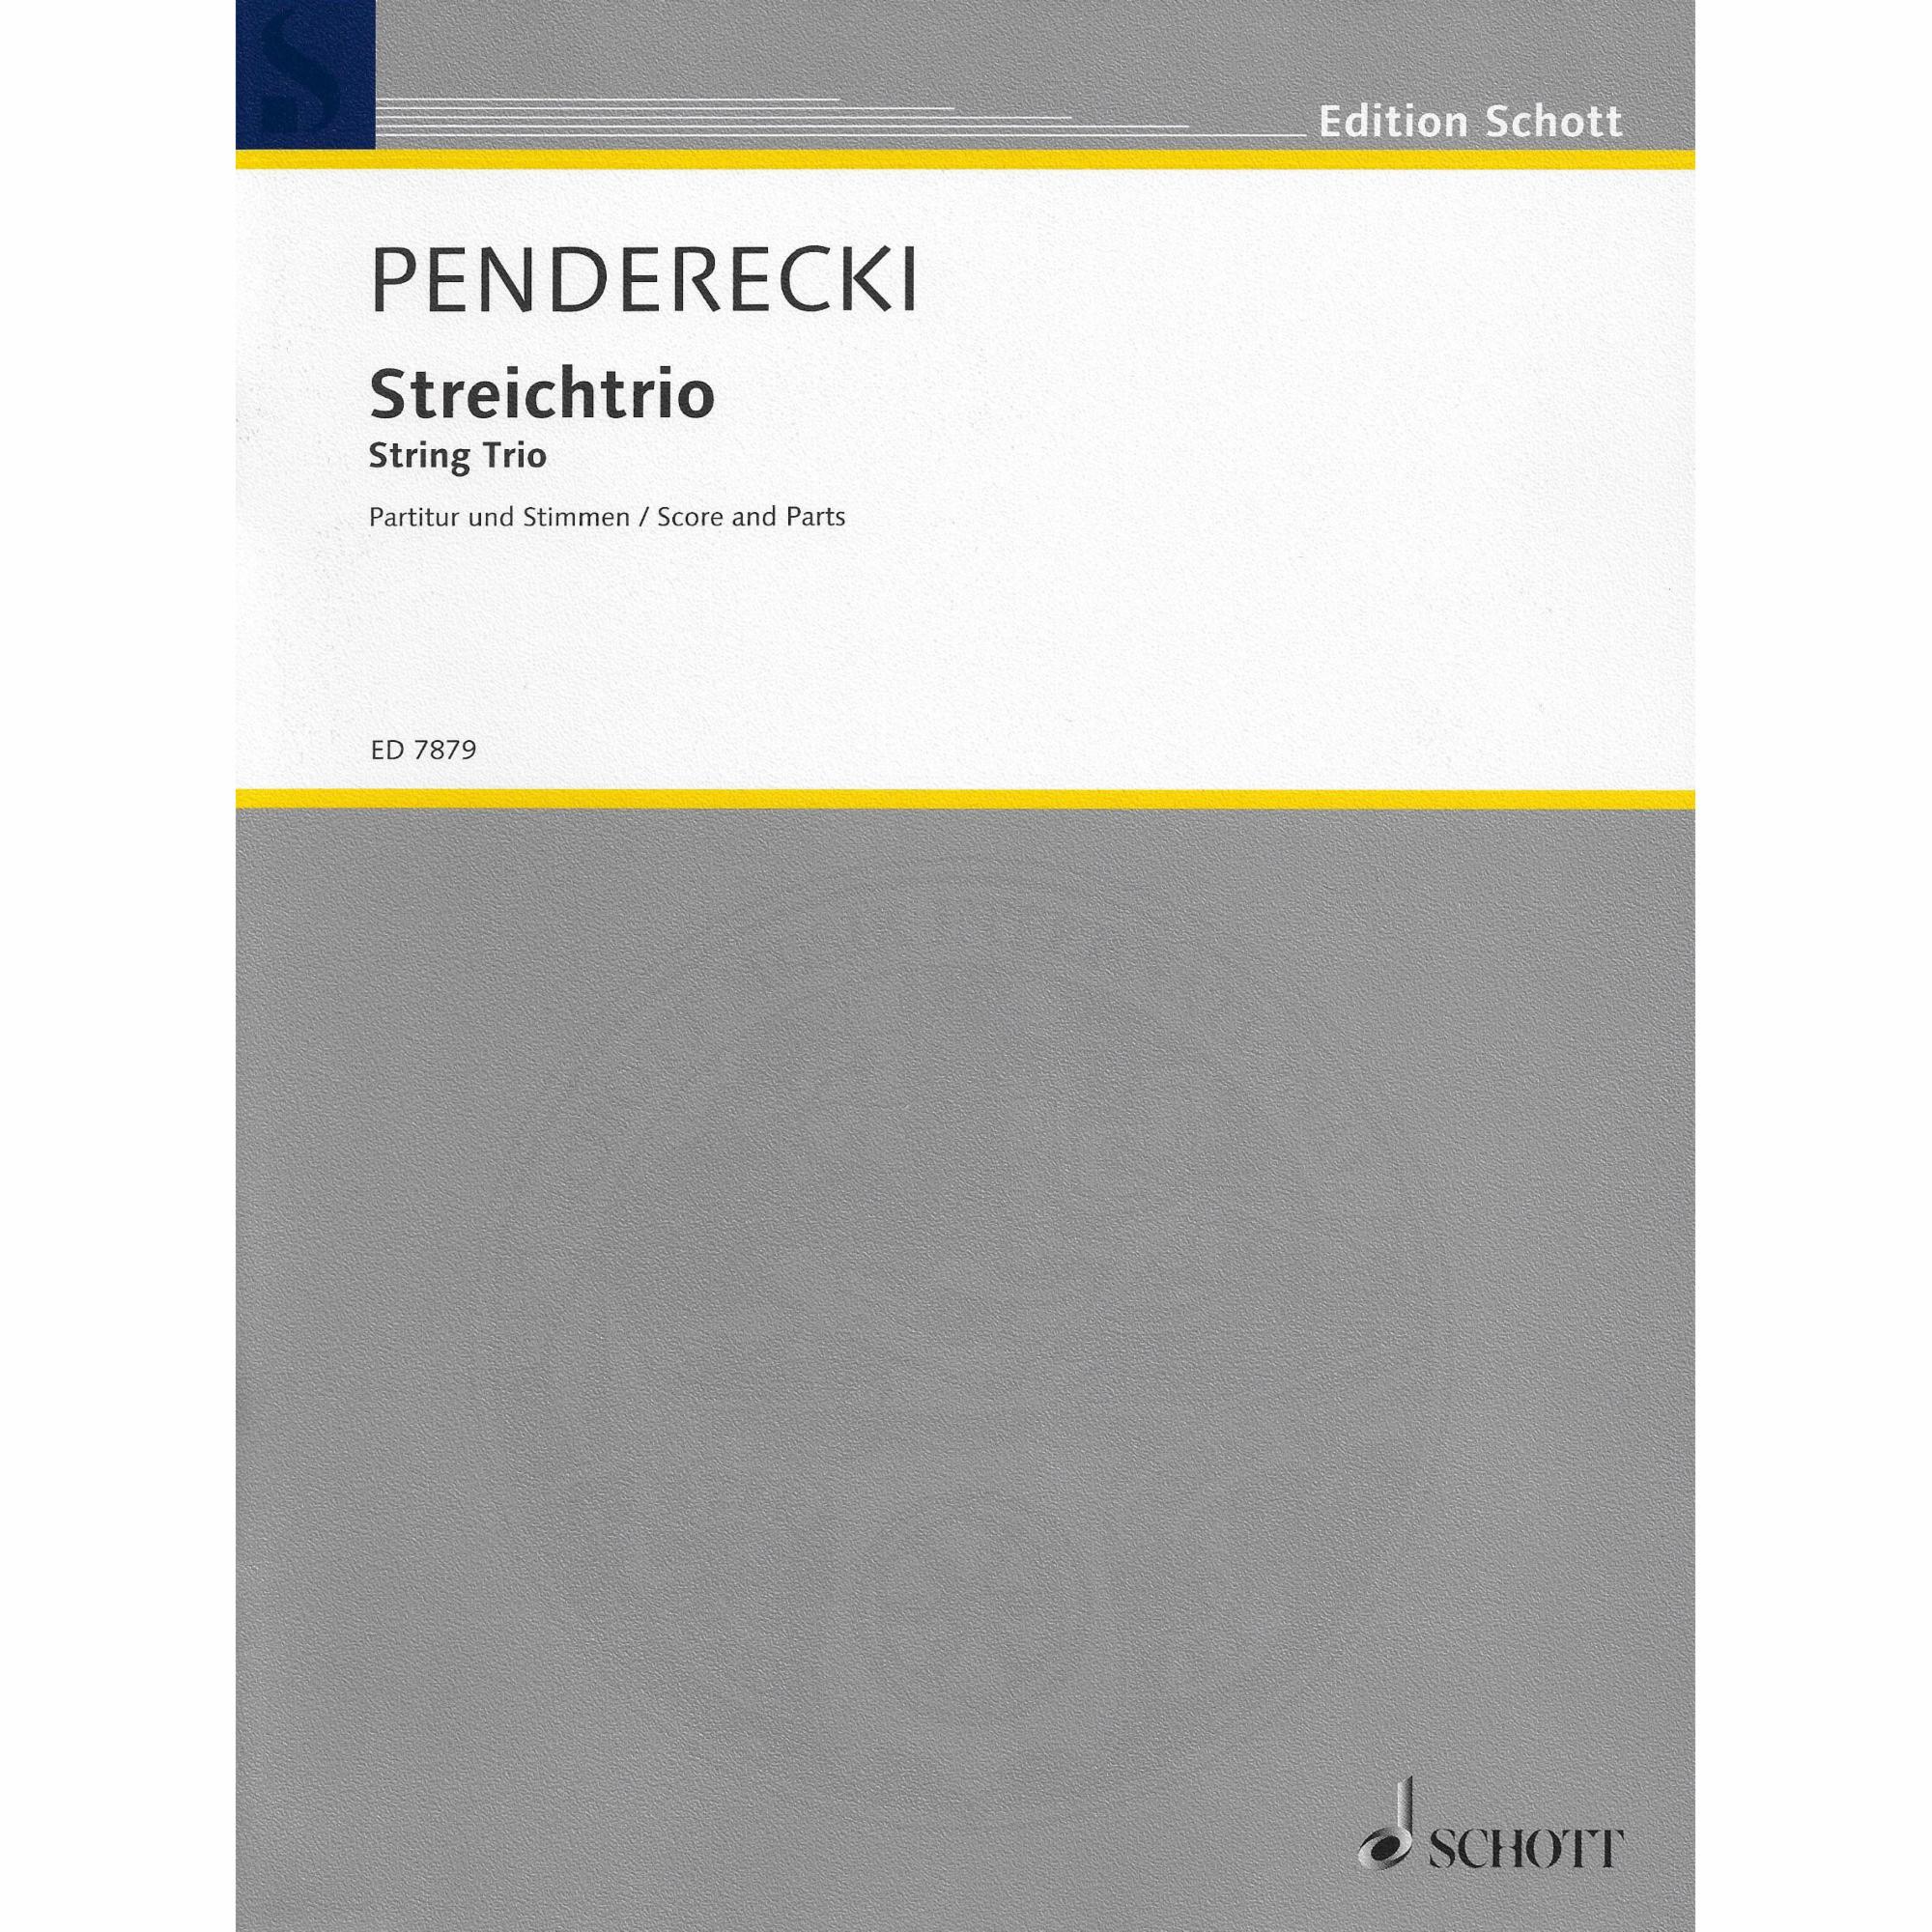 Penderecki -- String Trio for Violin, Viola, and Cello